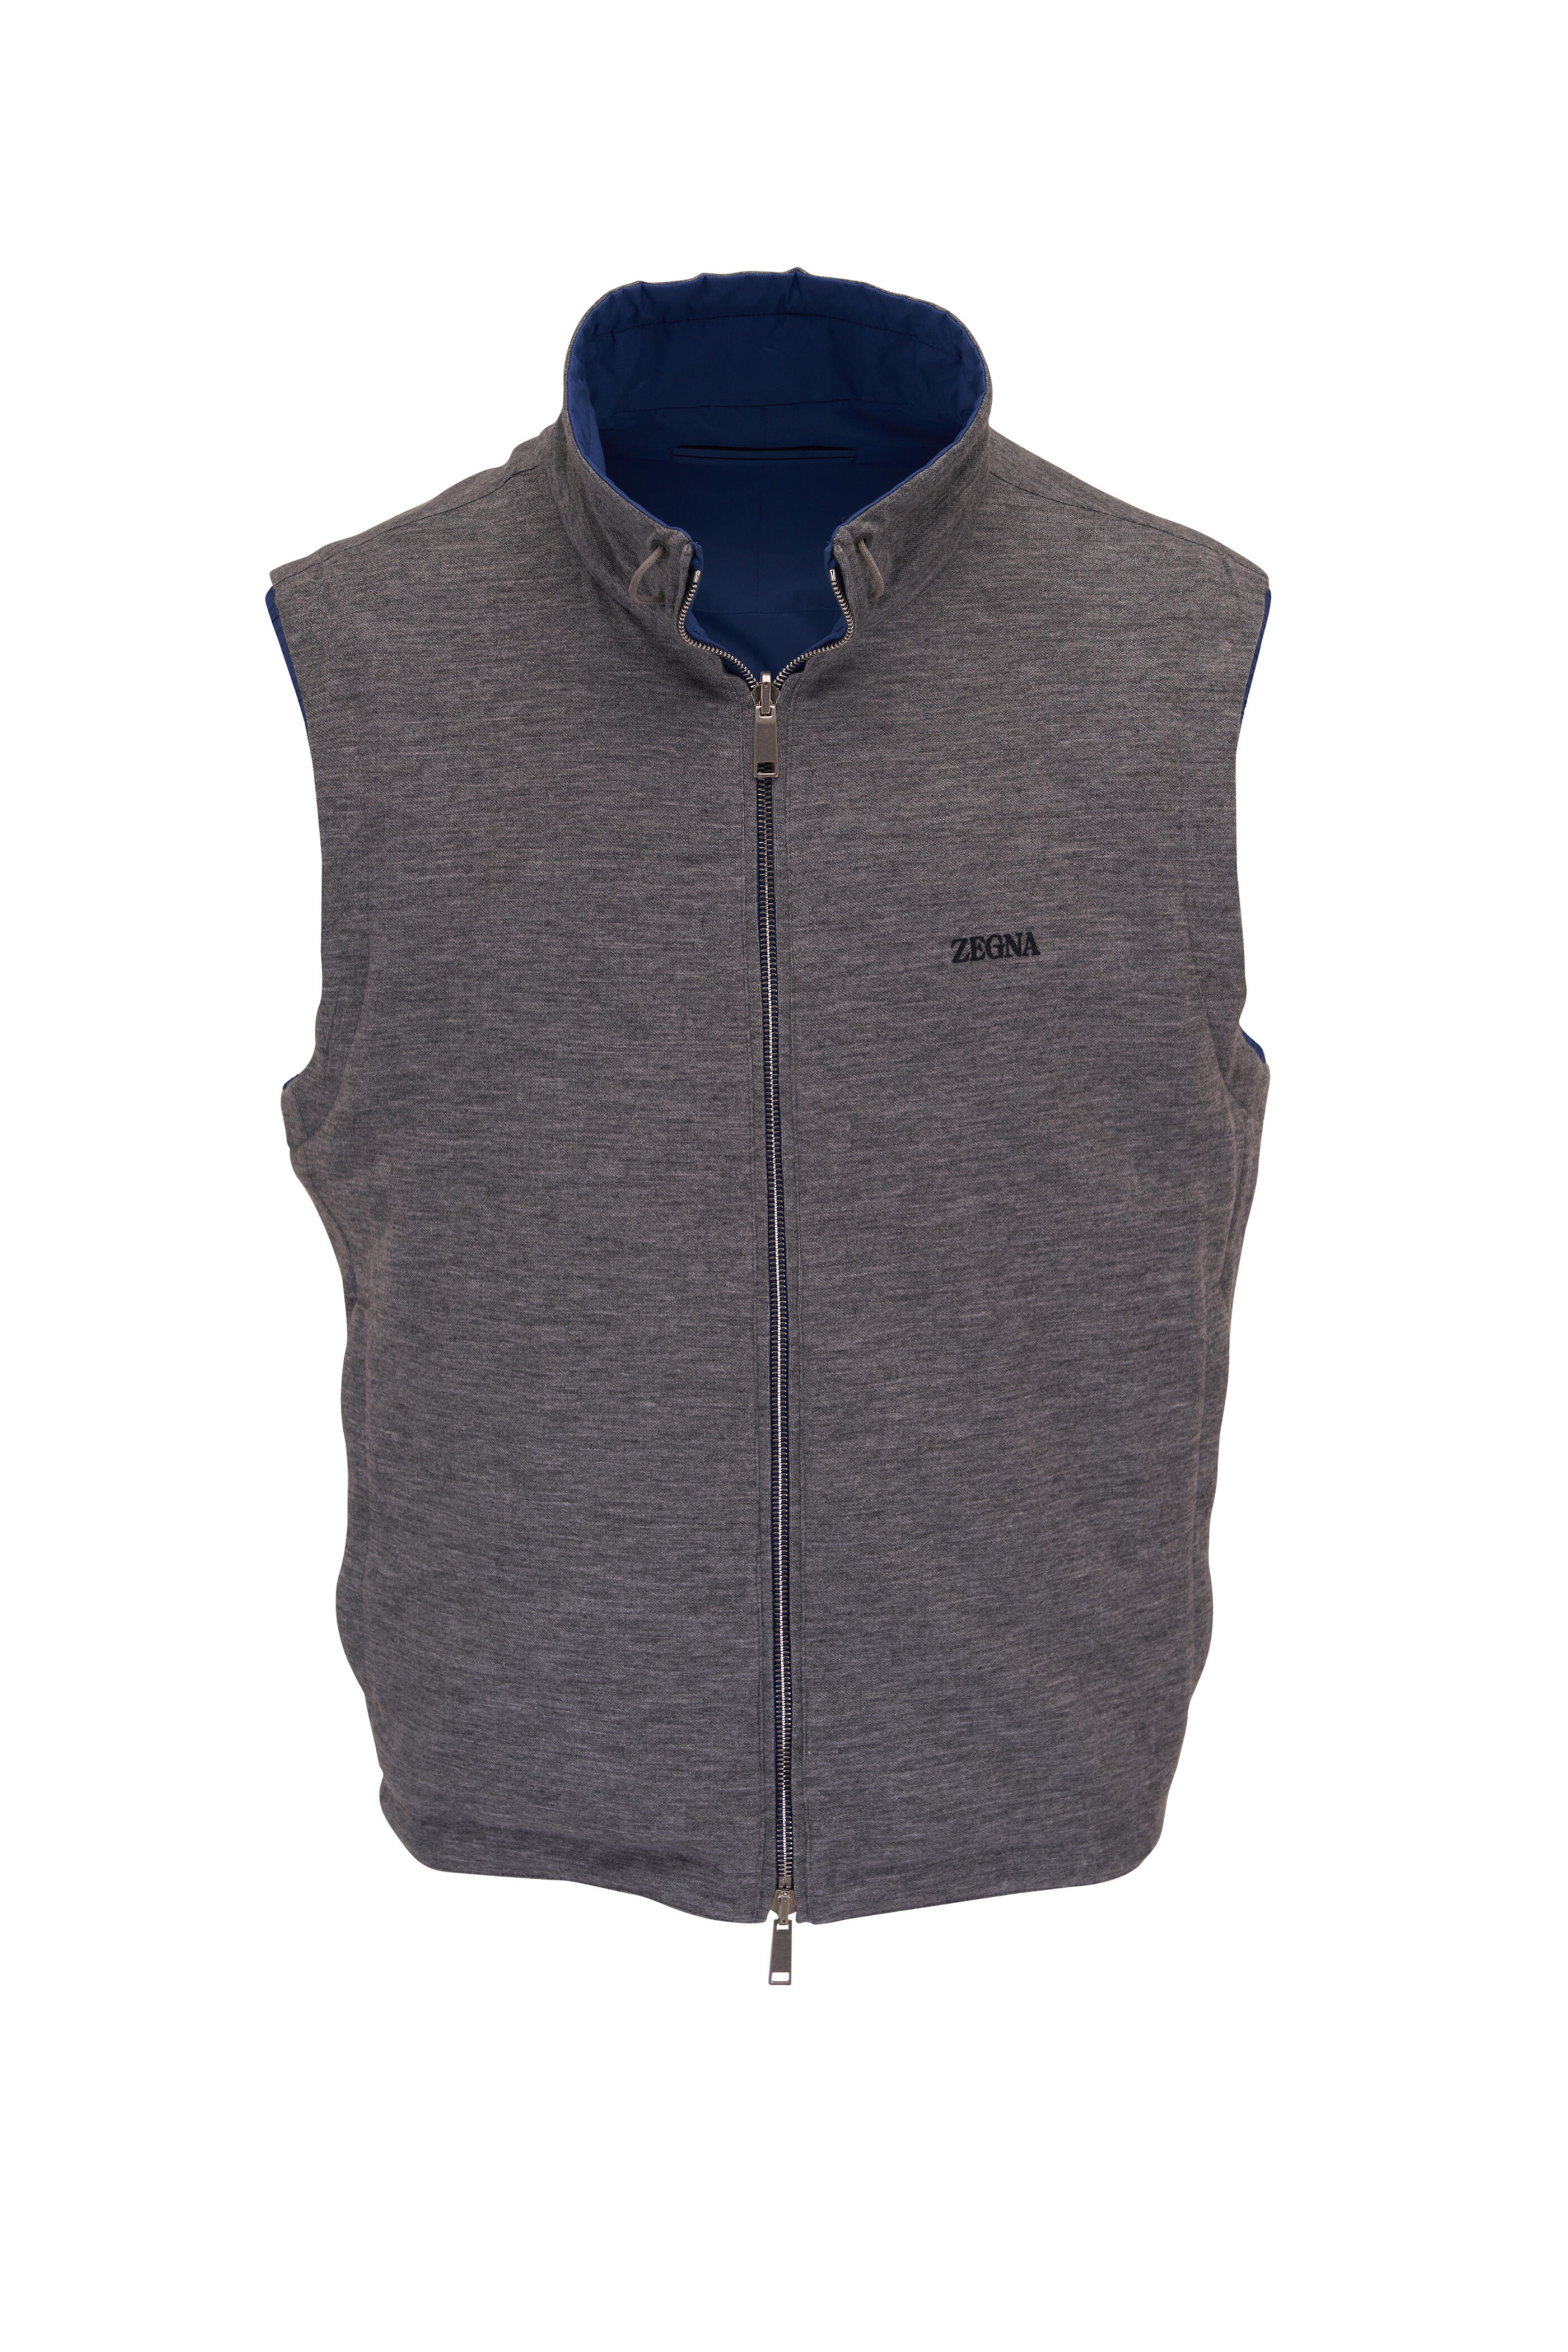 Zegna - Blue & Gray Reversible Vest | Mitchell Stores